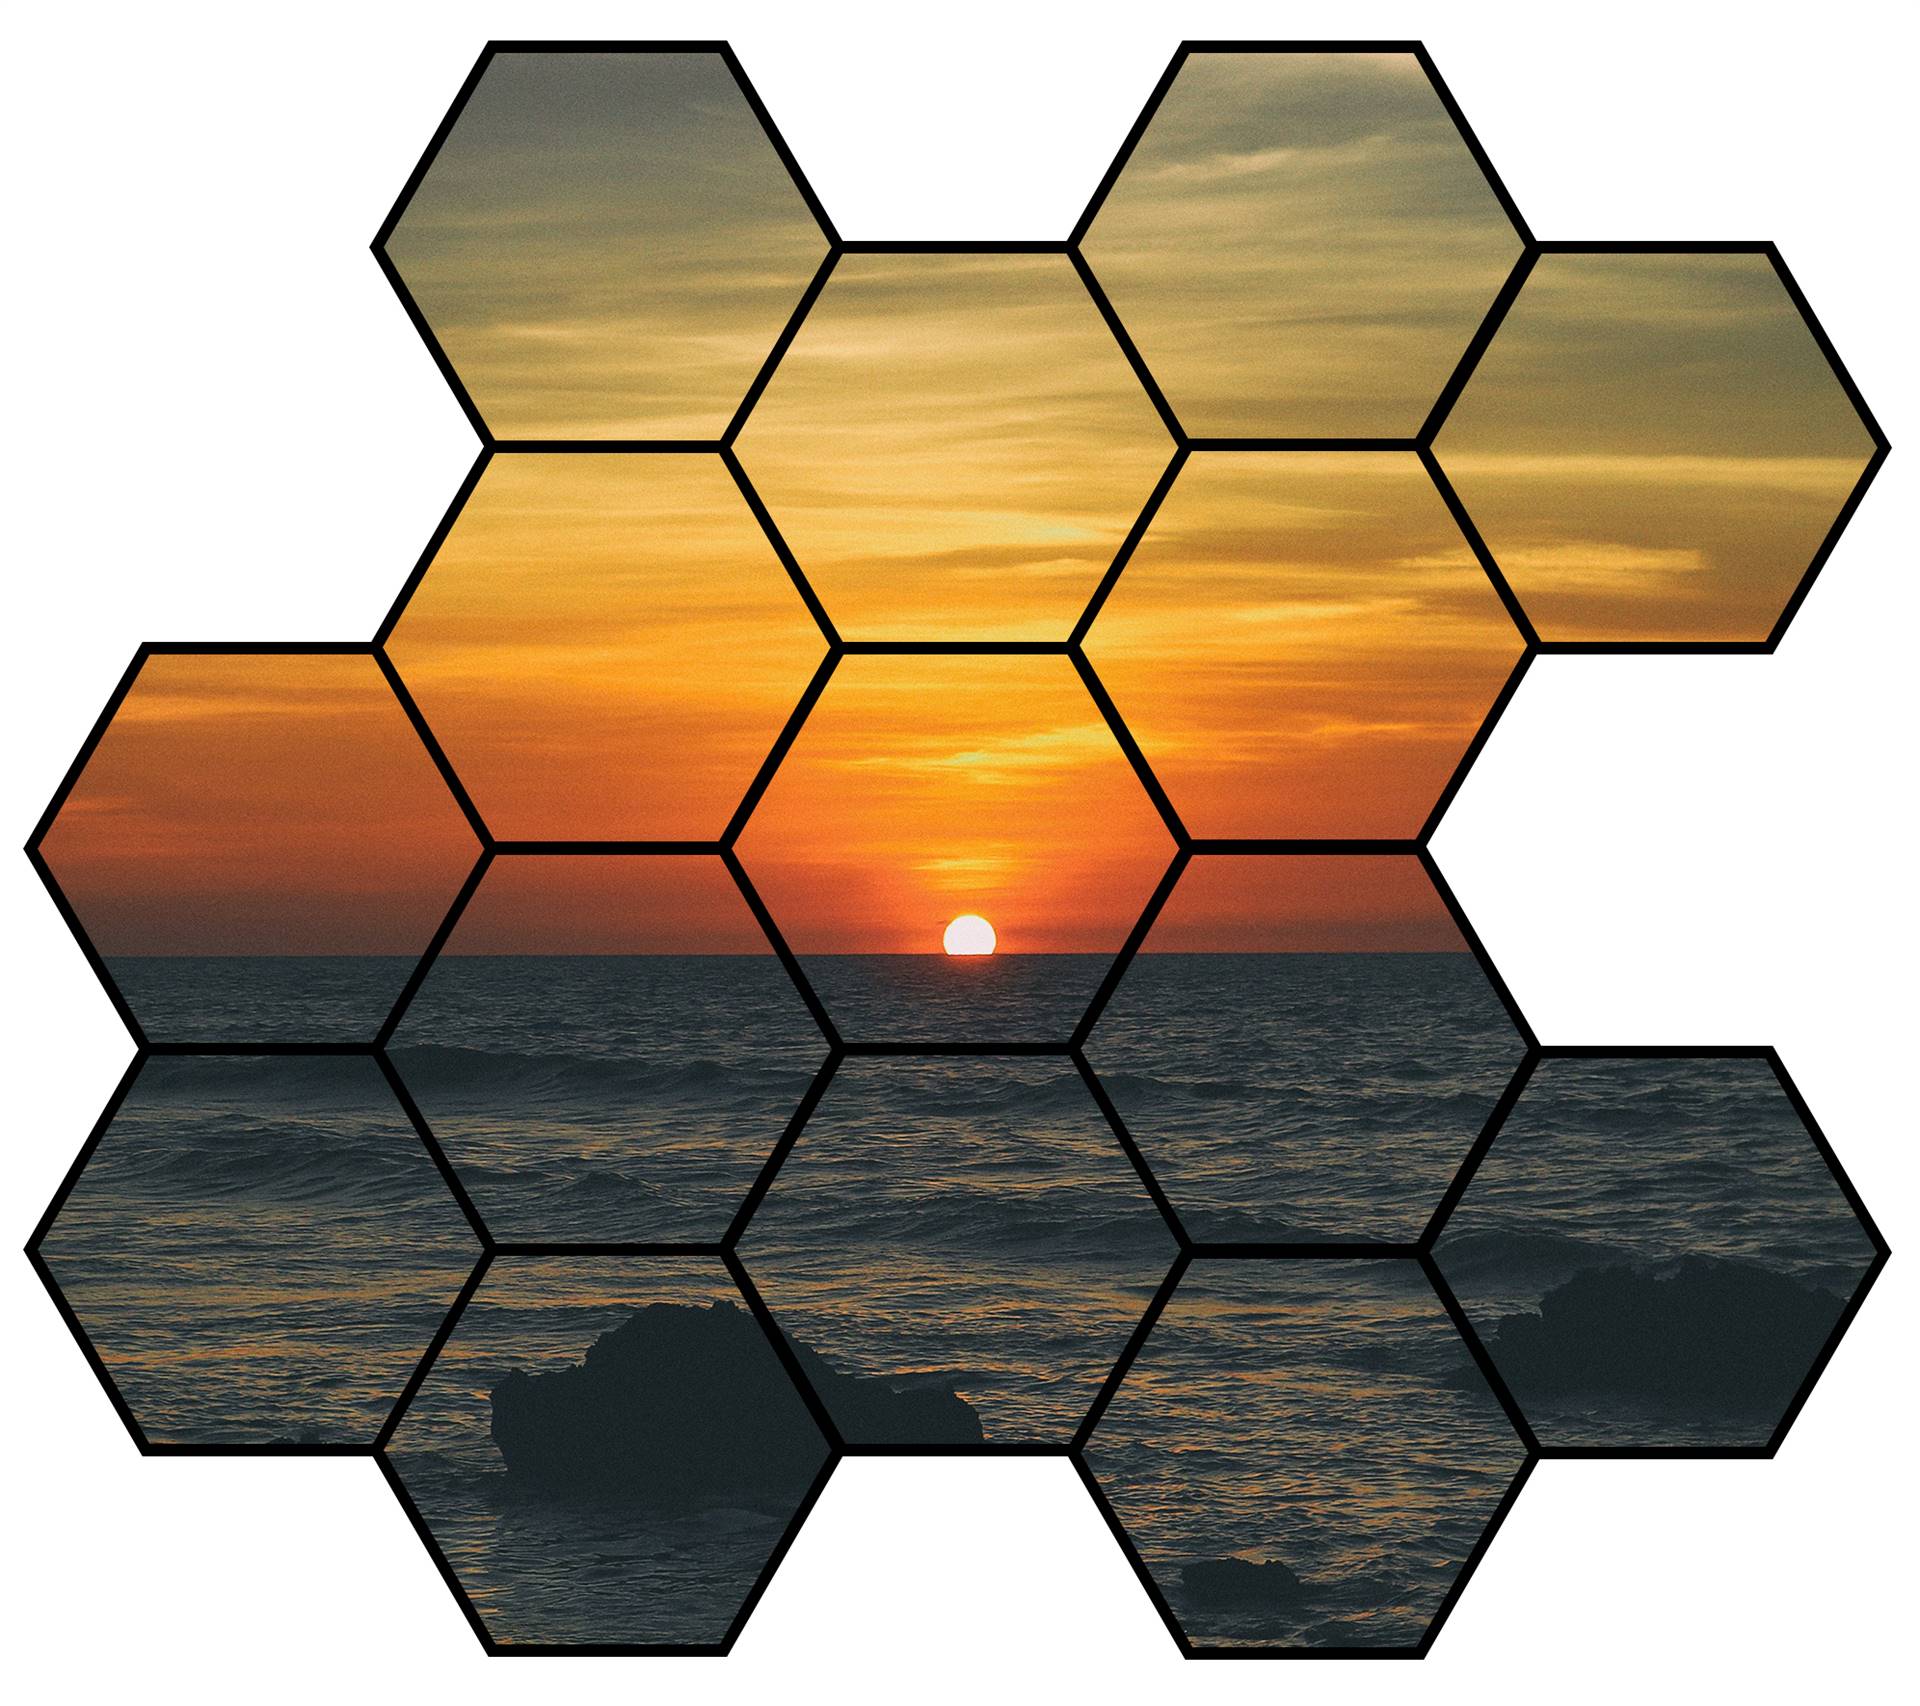 Sunset made of hexagons